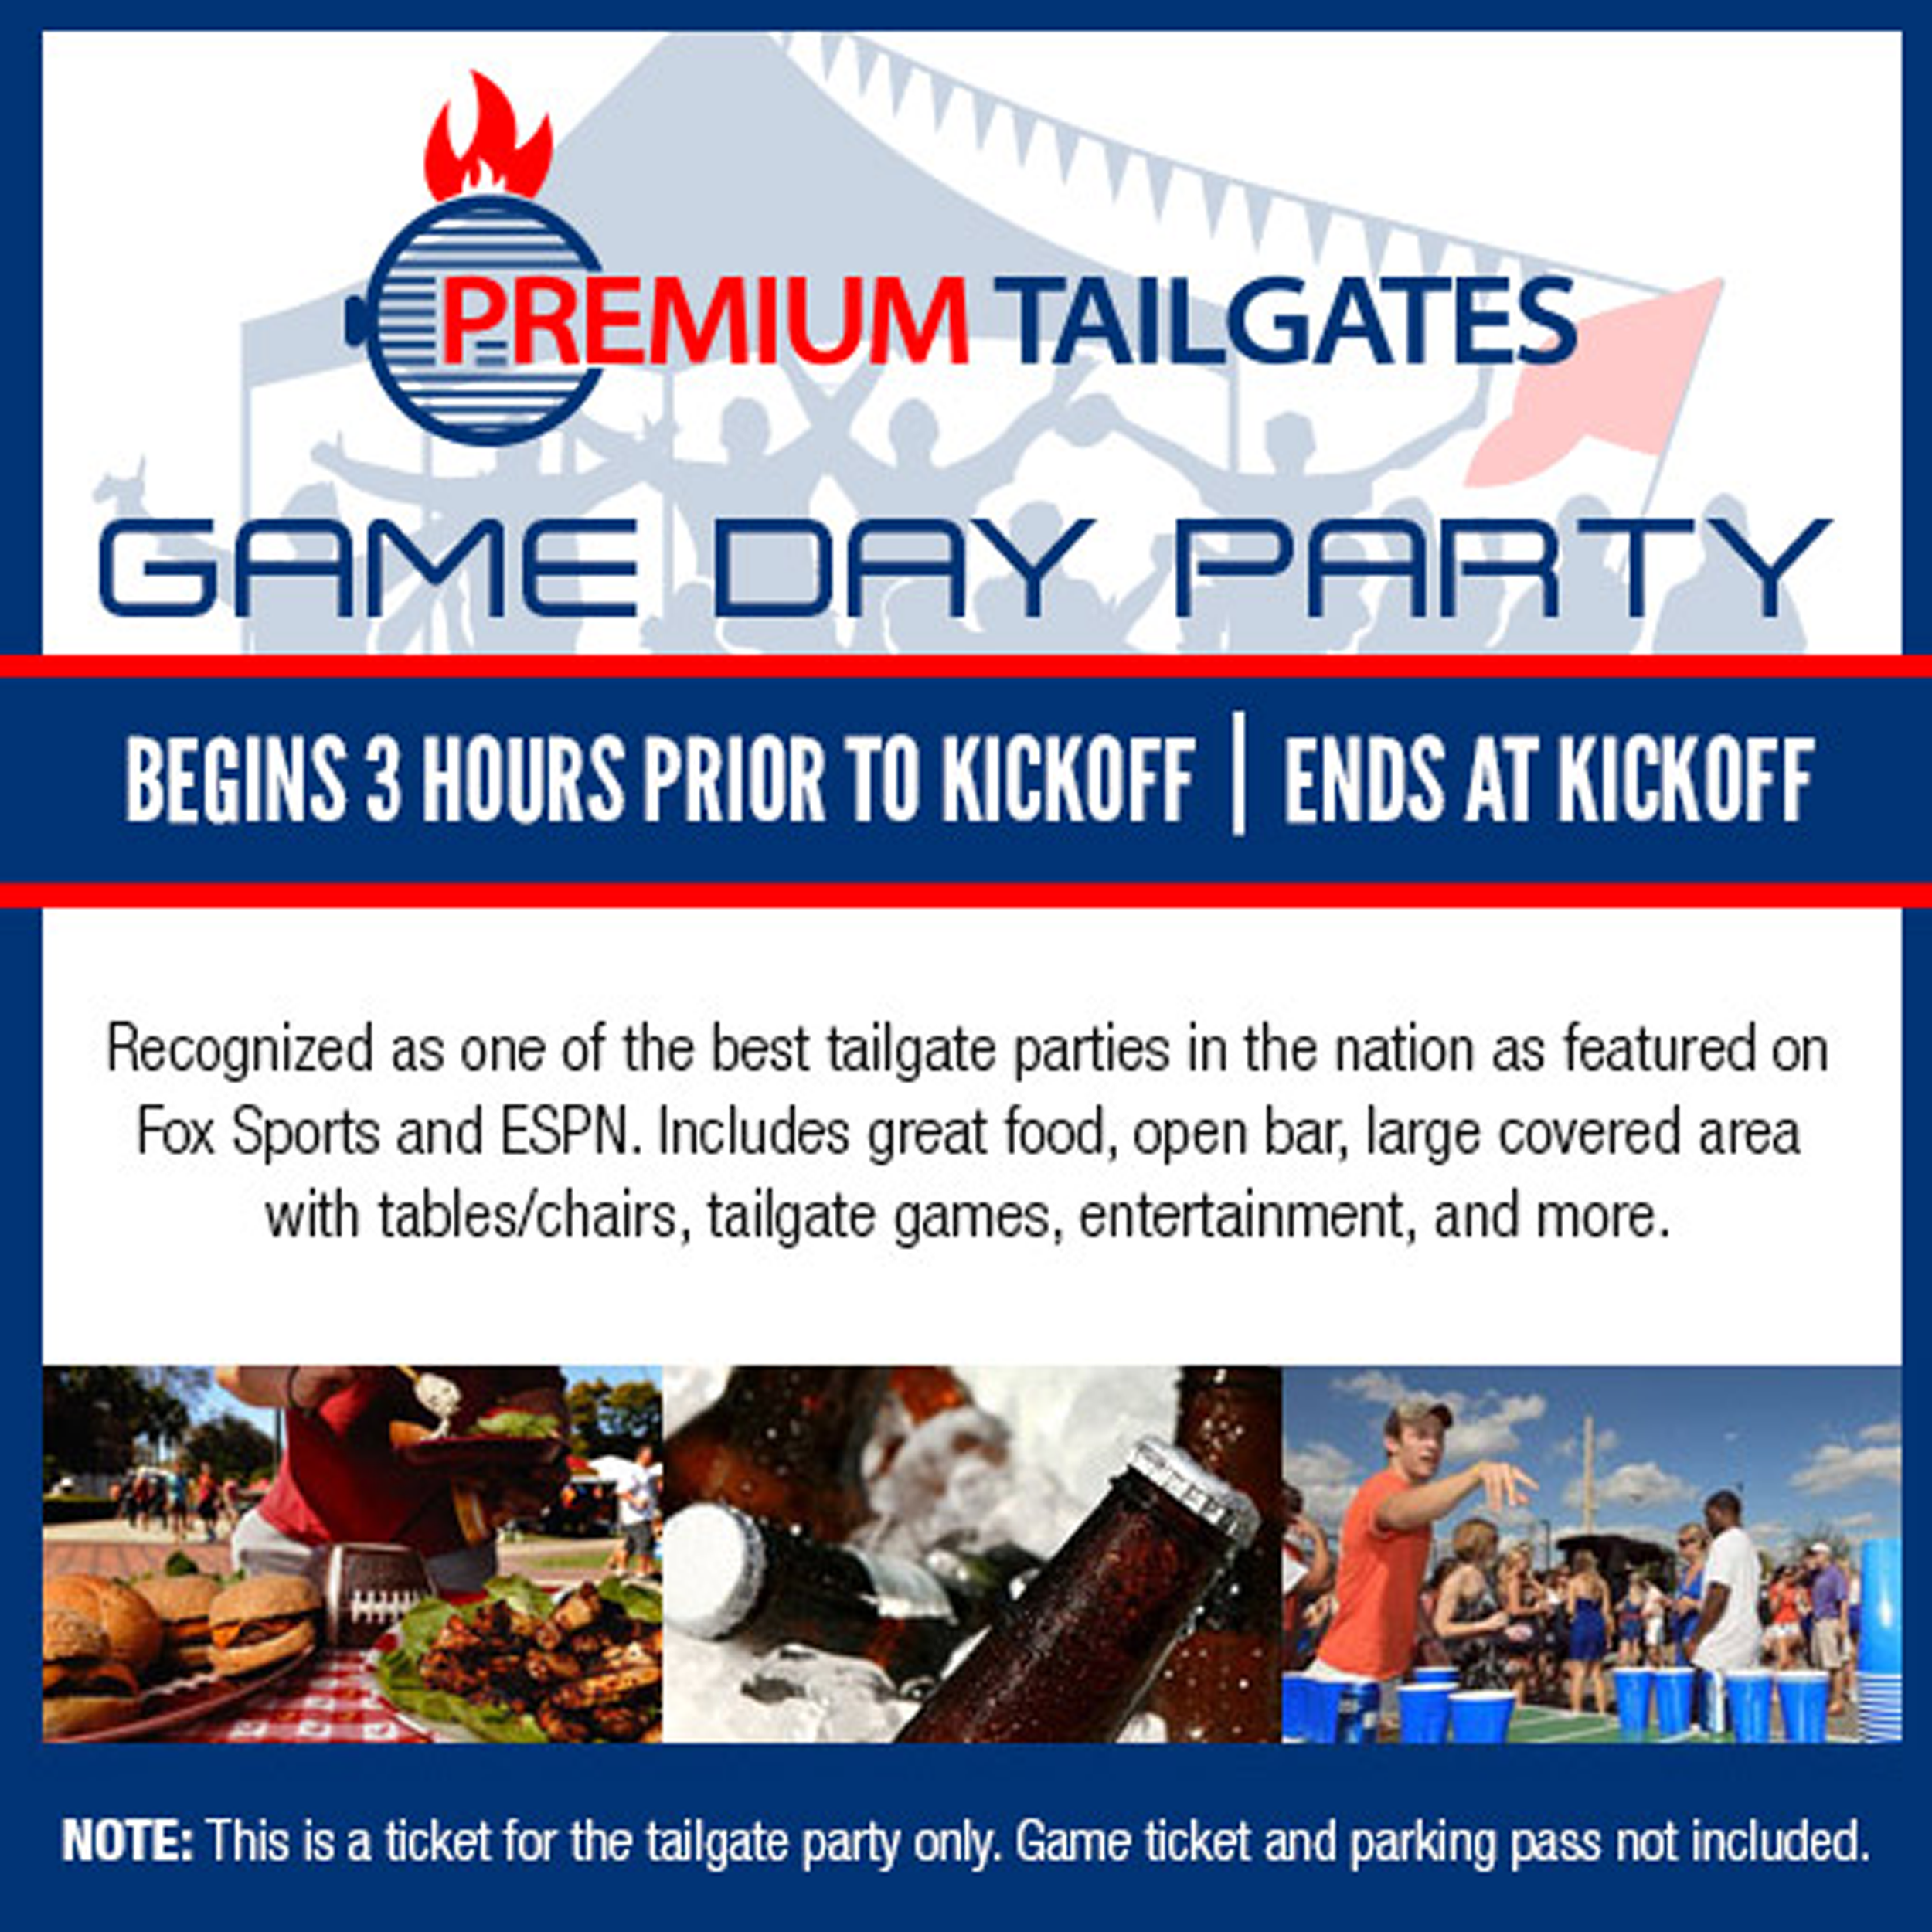 Premium Tailgates Game Day Party Texas Longhorns vs